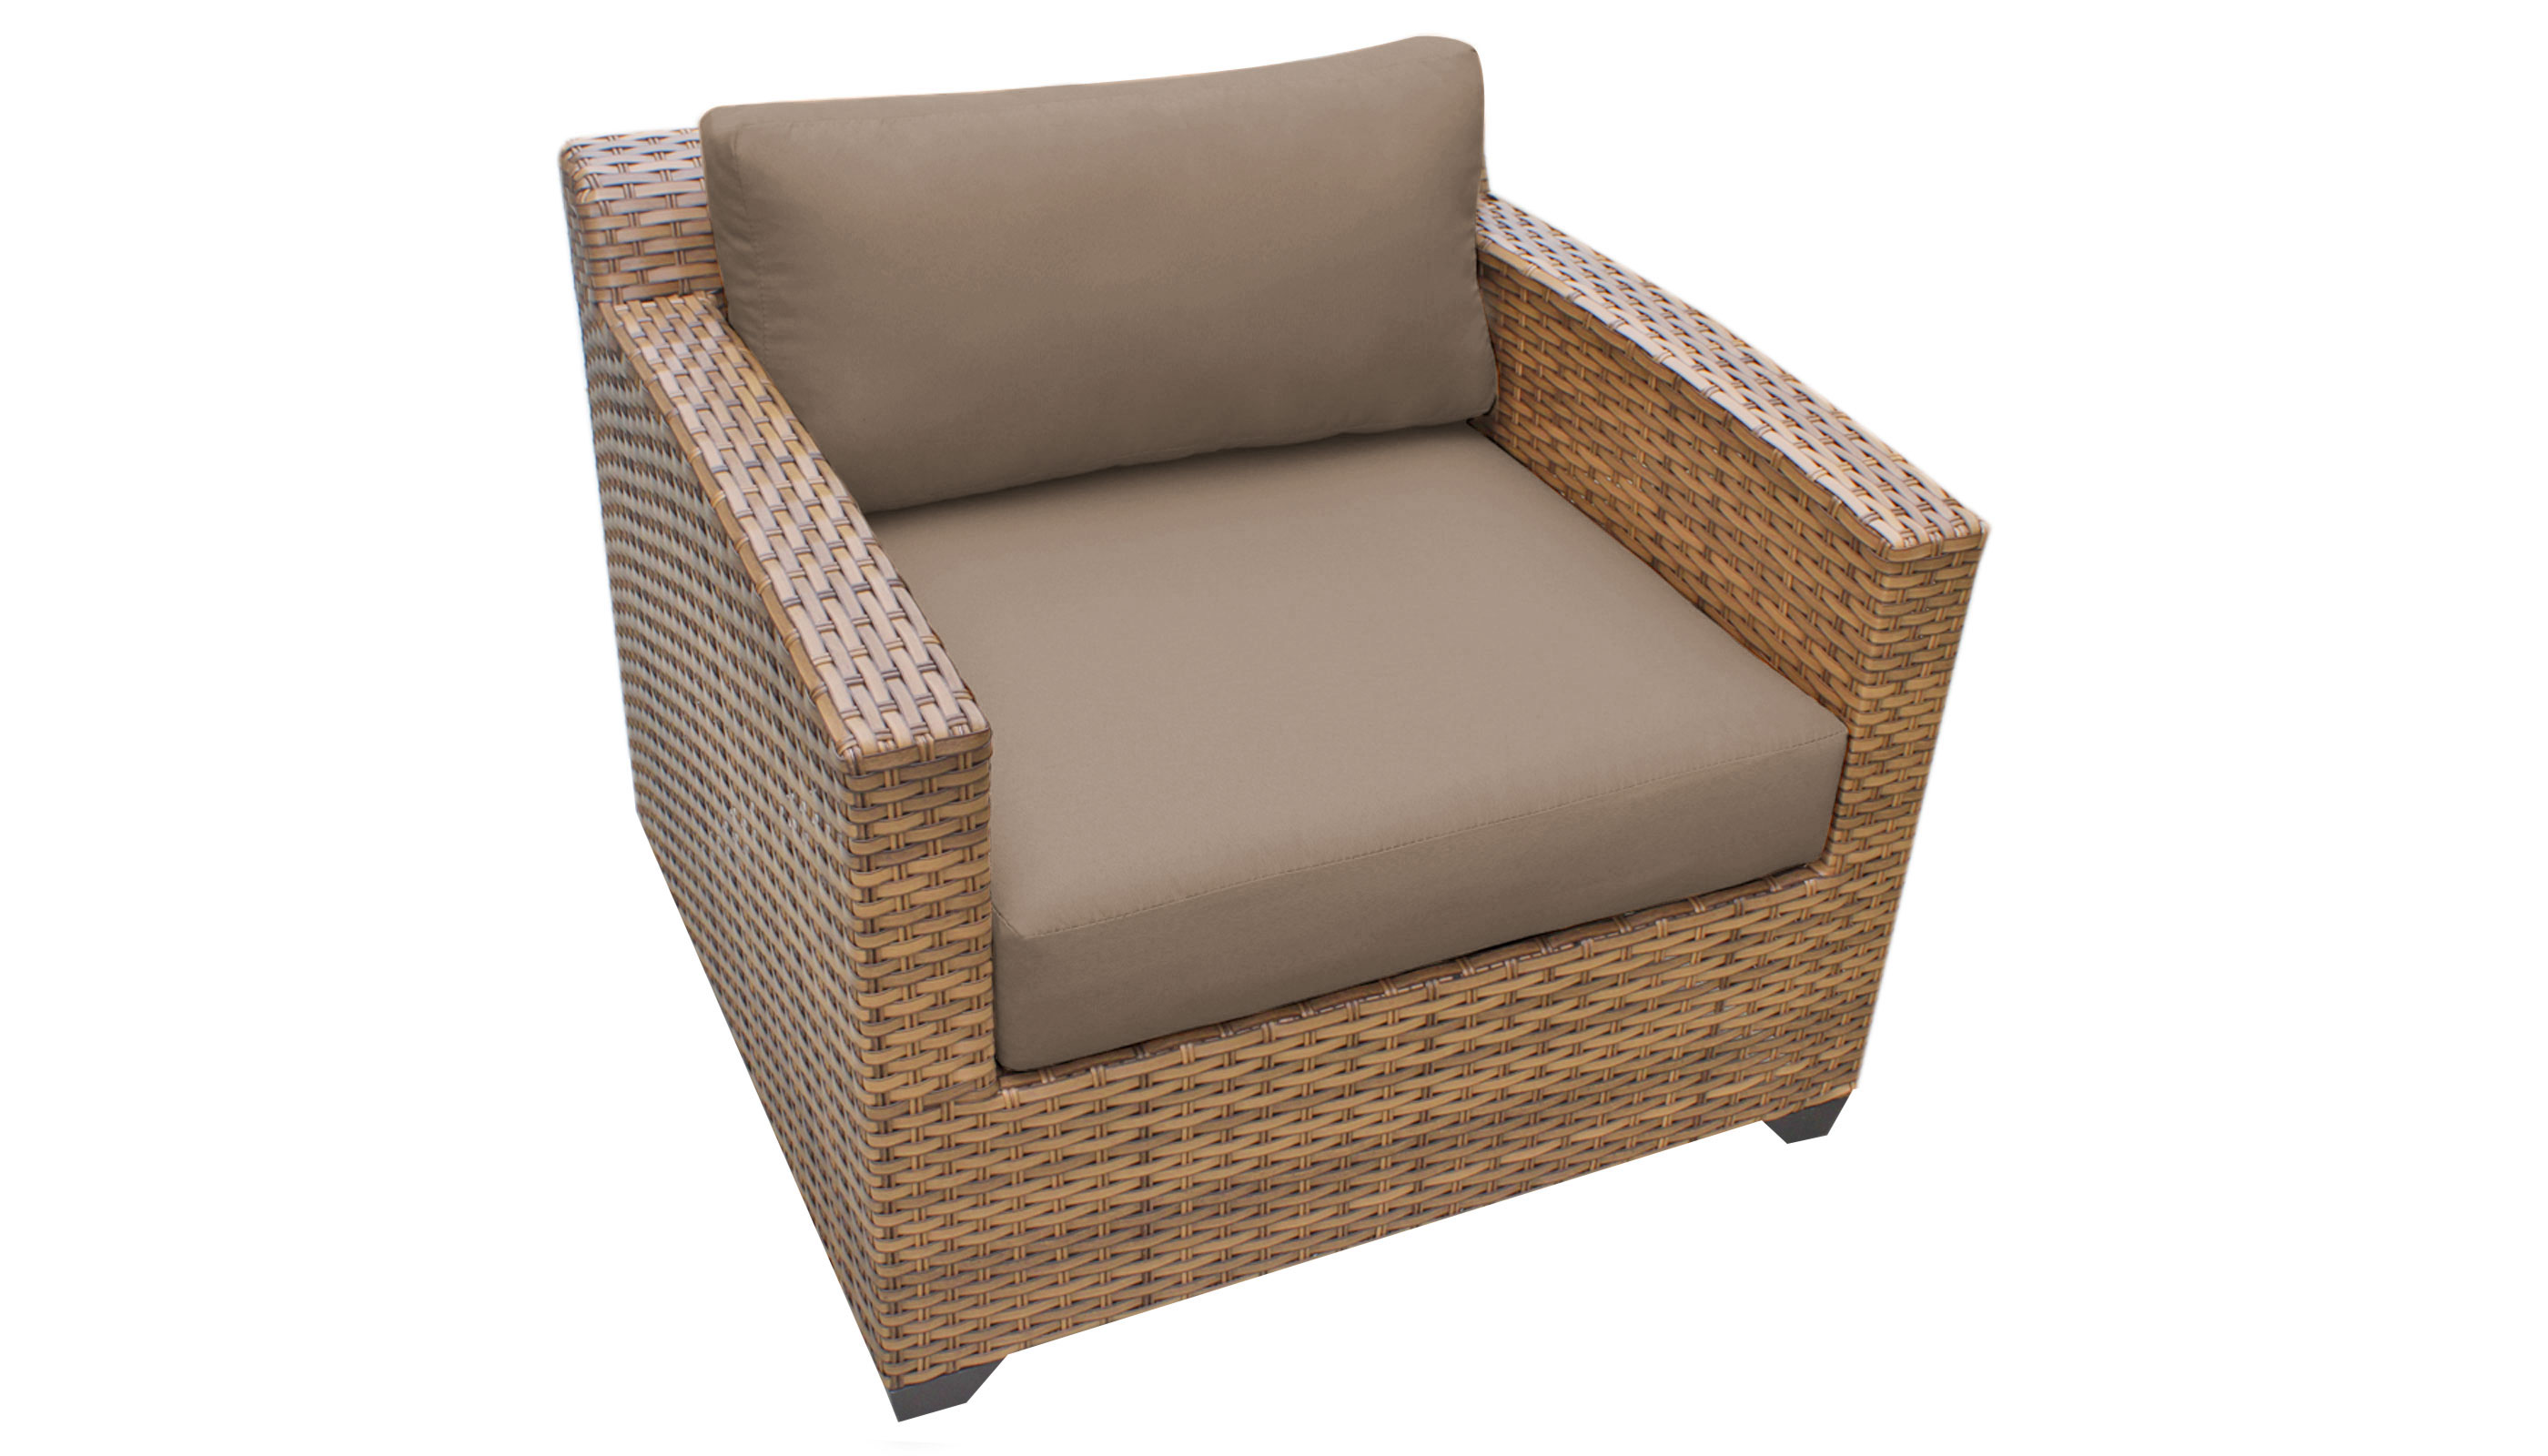 Laguna 3 Piece Outdoor Wicker Patio Furniture Set 03a - TK Classics